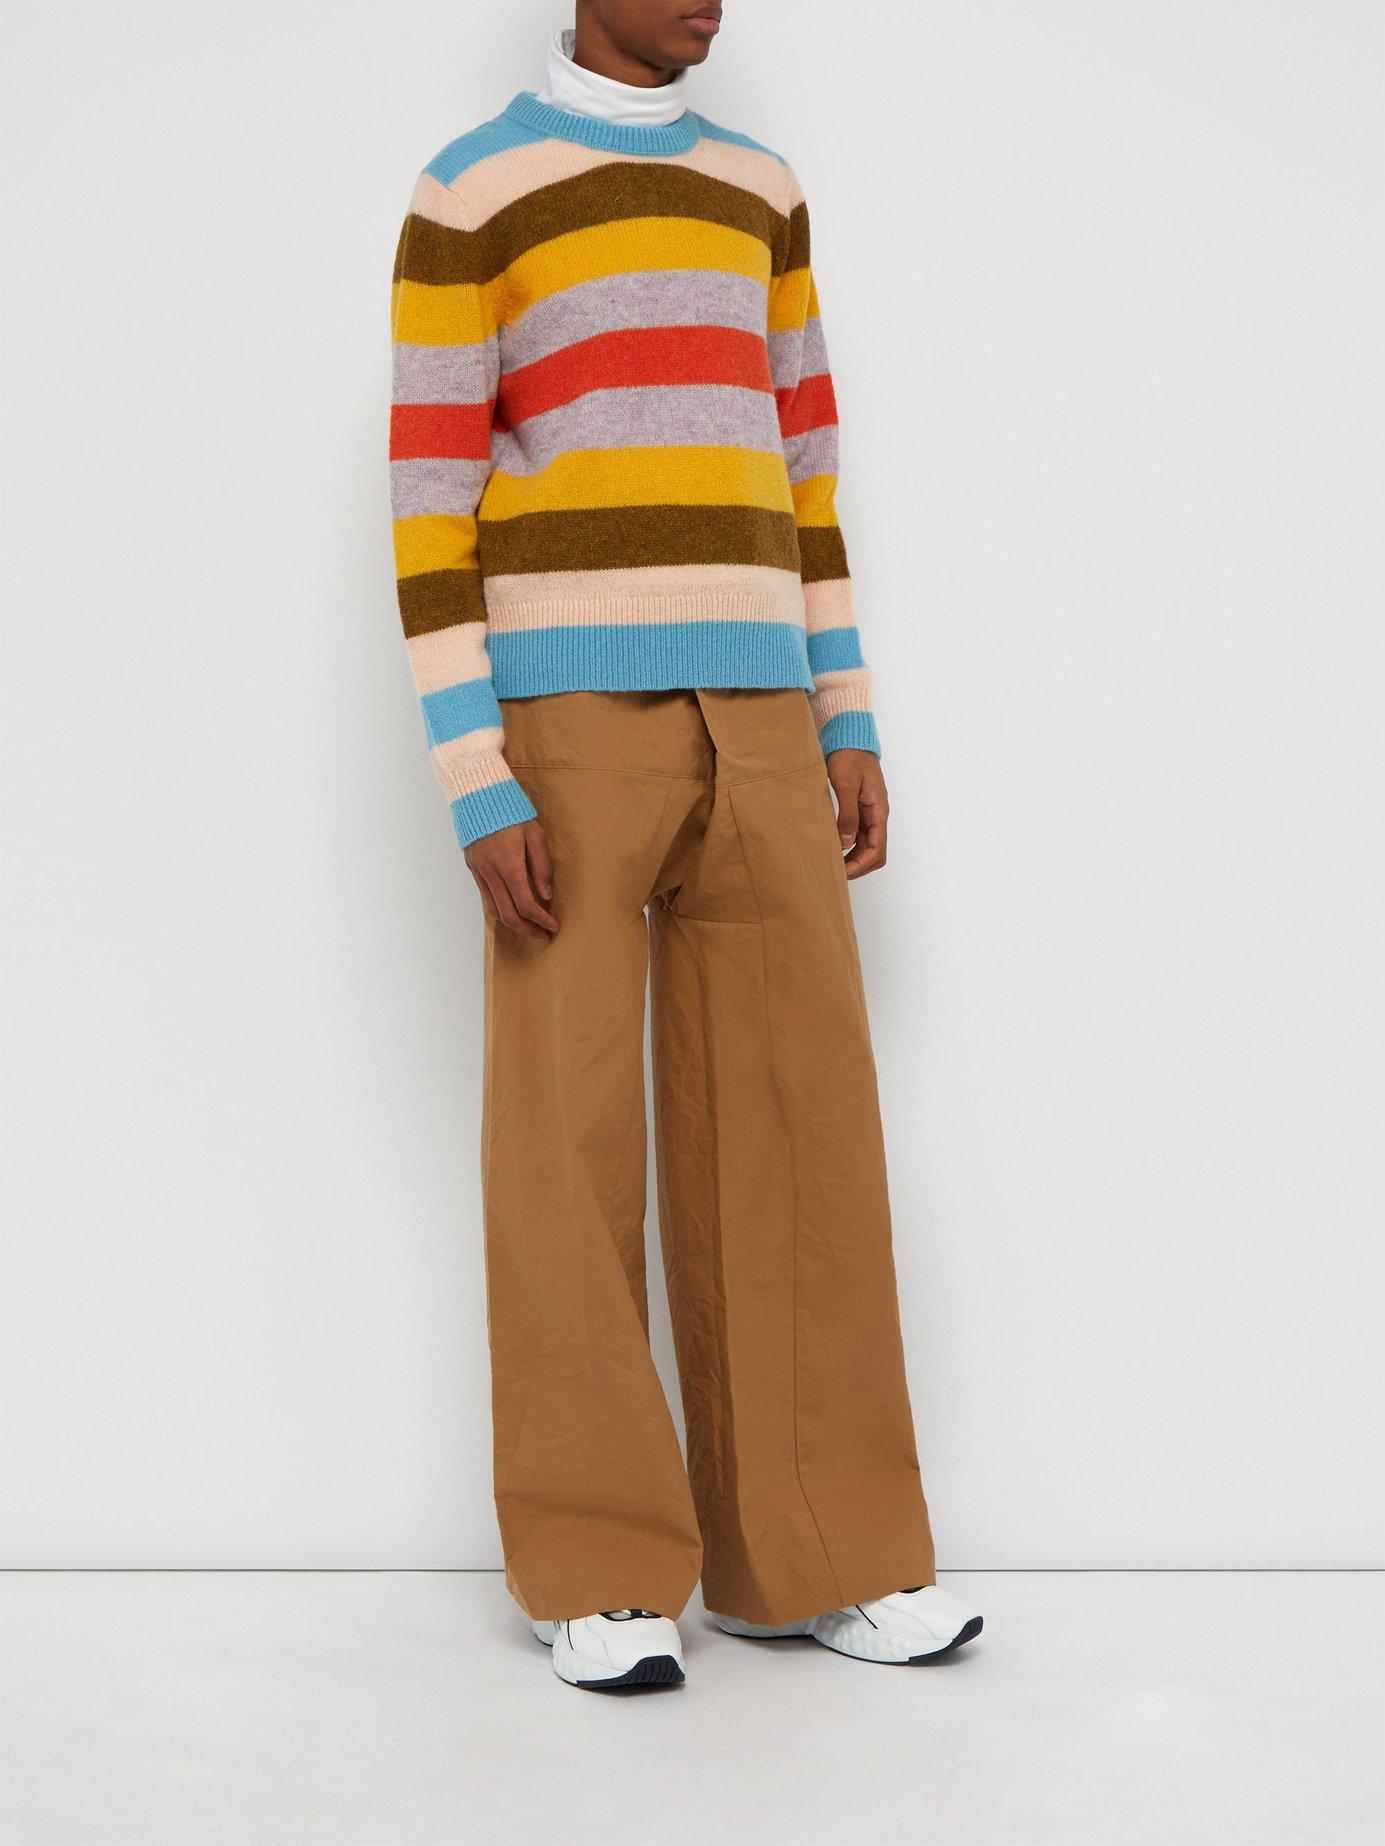 Acne Studios Wool Kai Block Stripe Multi Mix Stripe Striped Sweater in Blue  for Men - Lyst